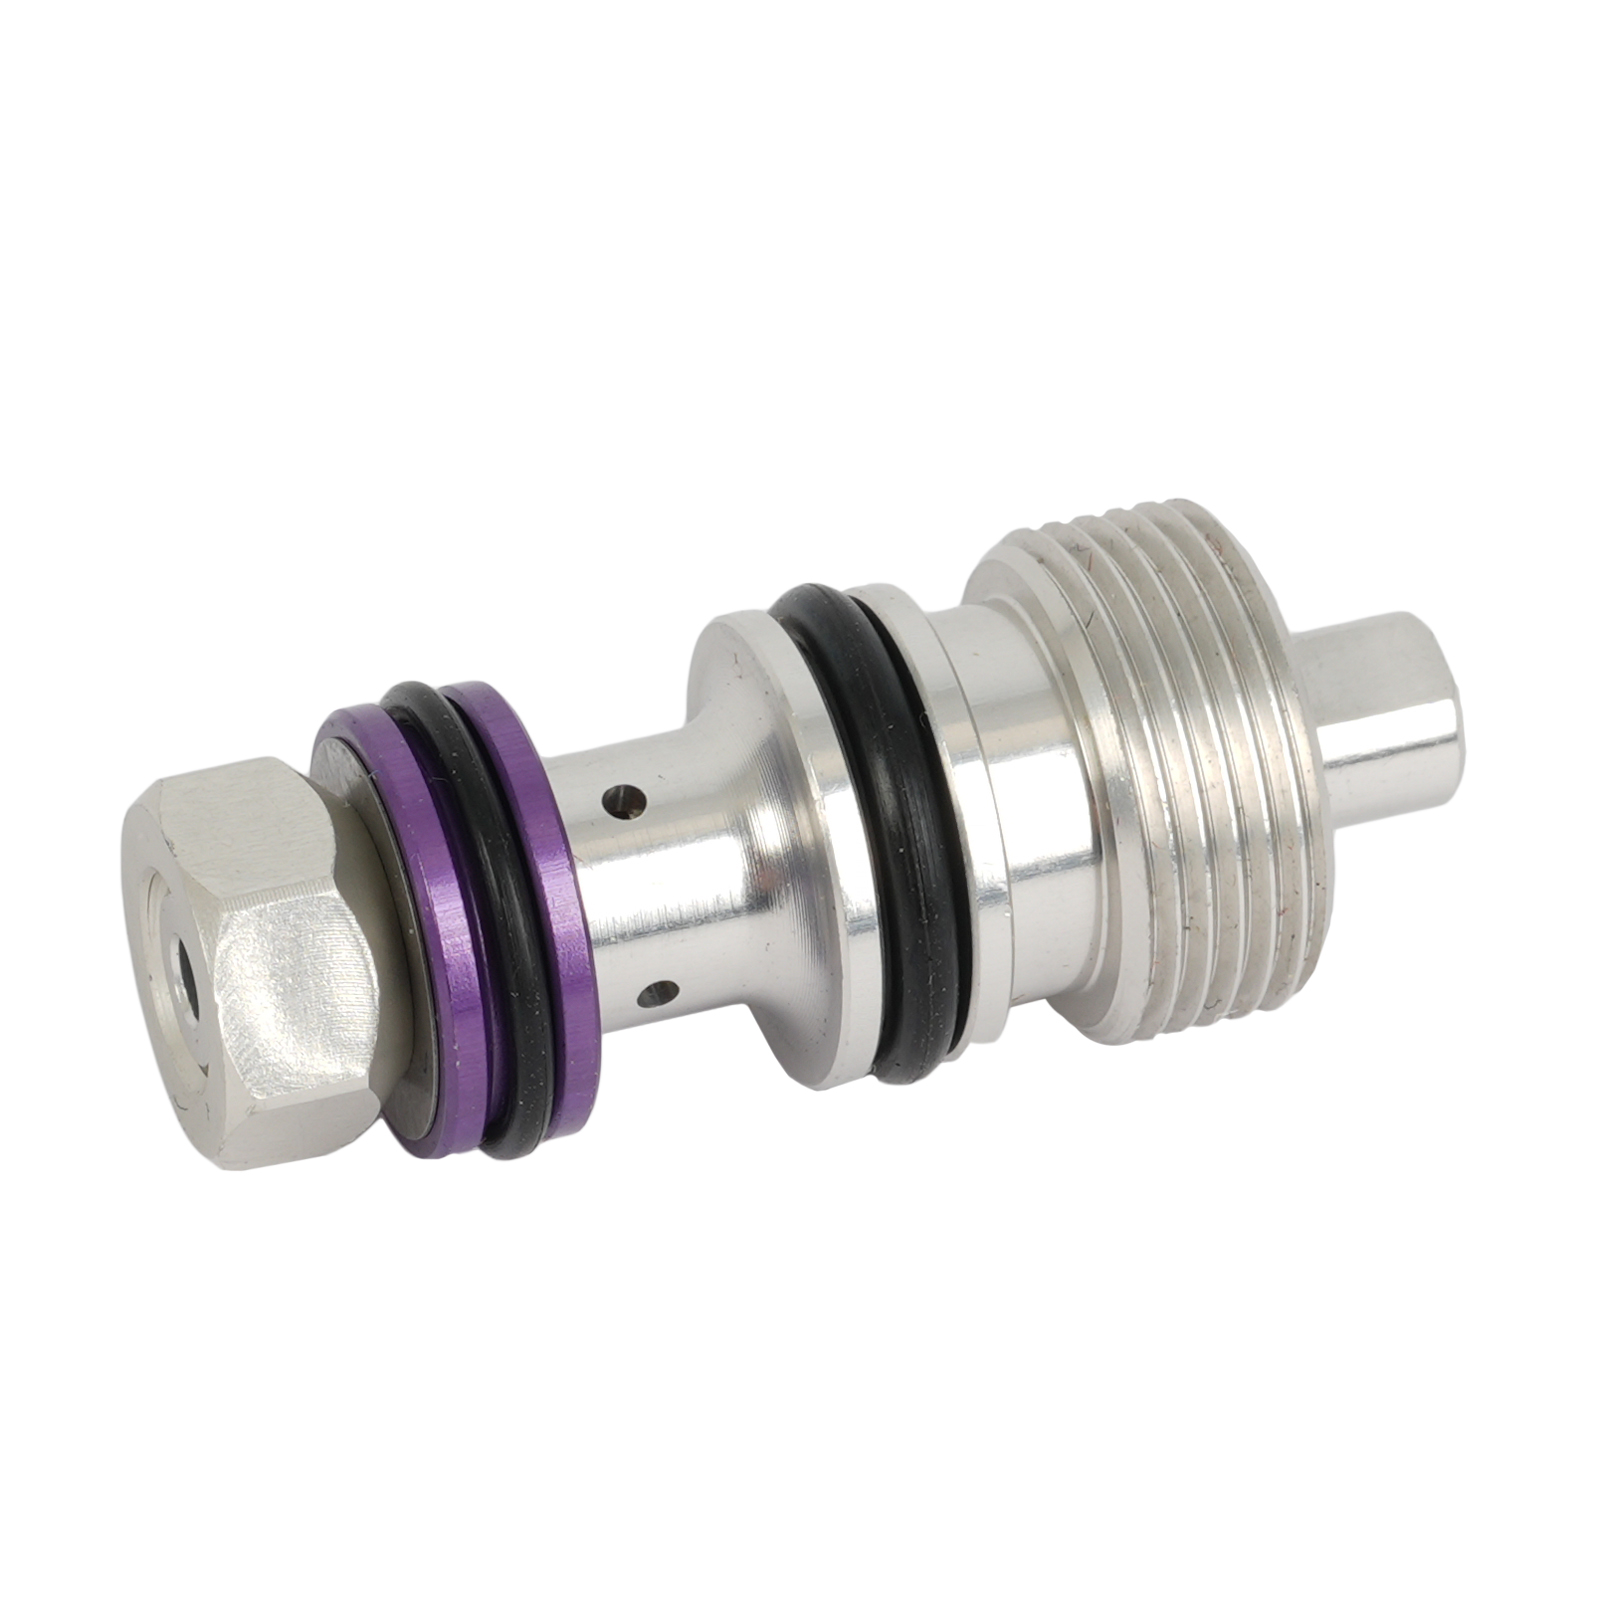 Productfoto van Formula CTS Compression Kit voor 33 / 35 / Selva - special ultra soft (violet) -  SB40256-00